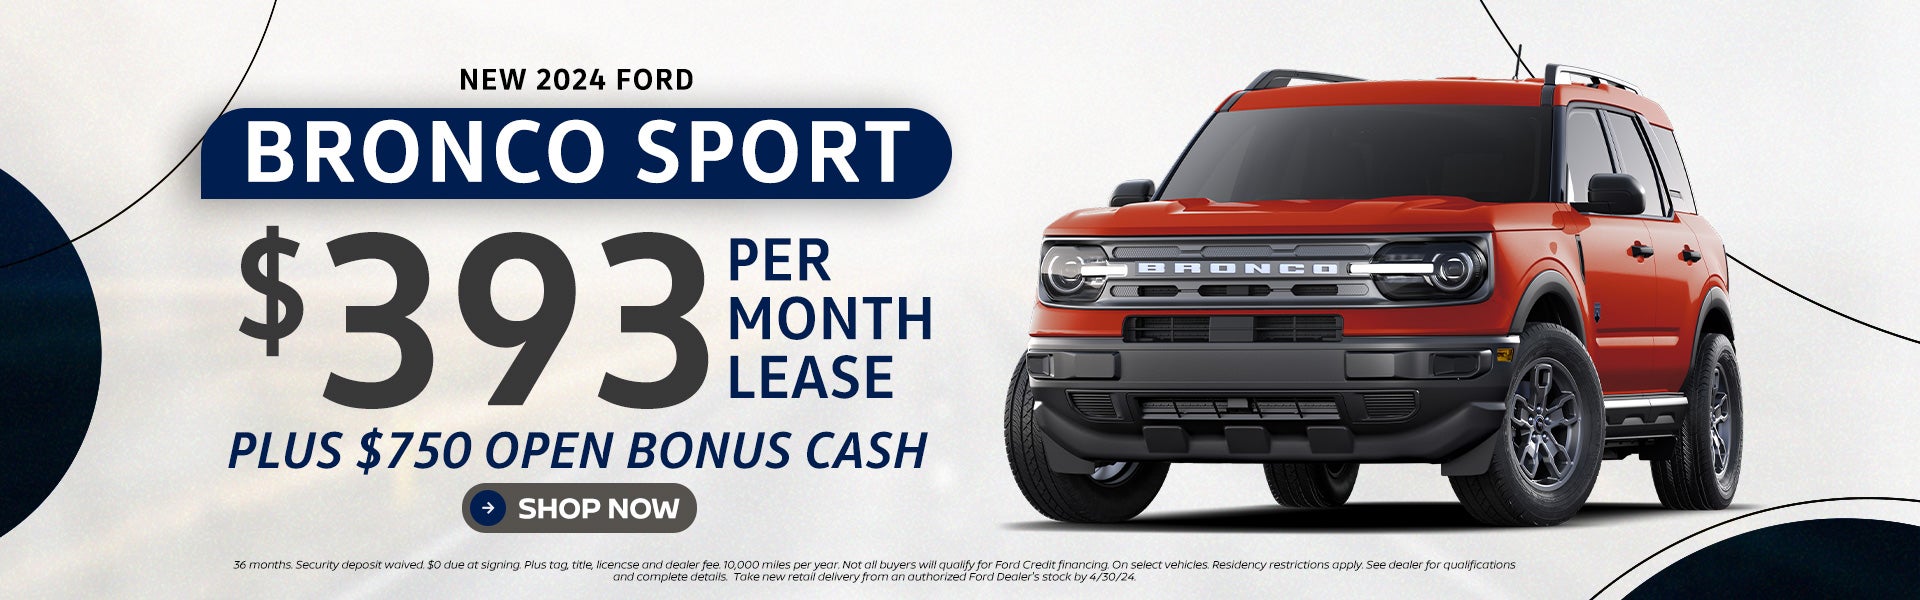 2024 Bronco Sport $393 per month | 36 months